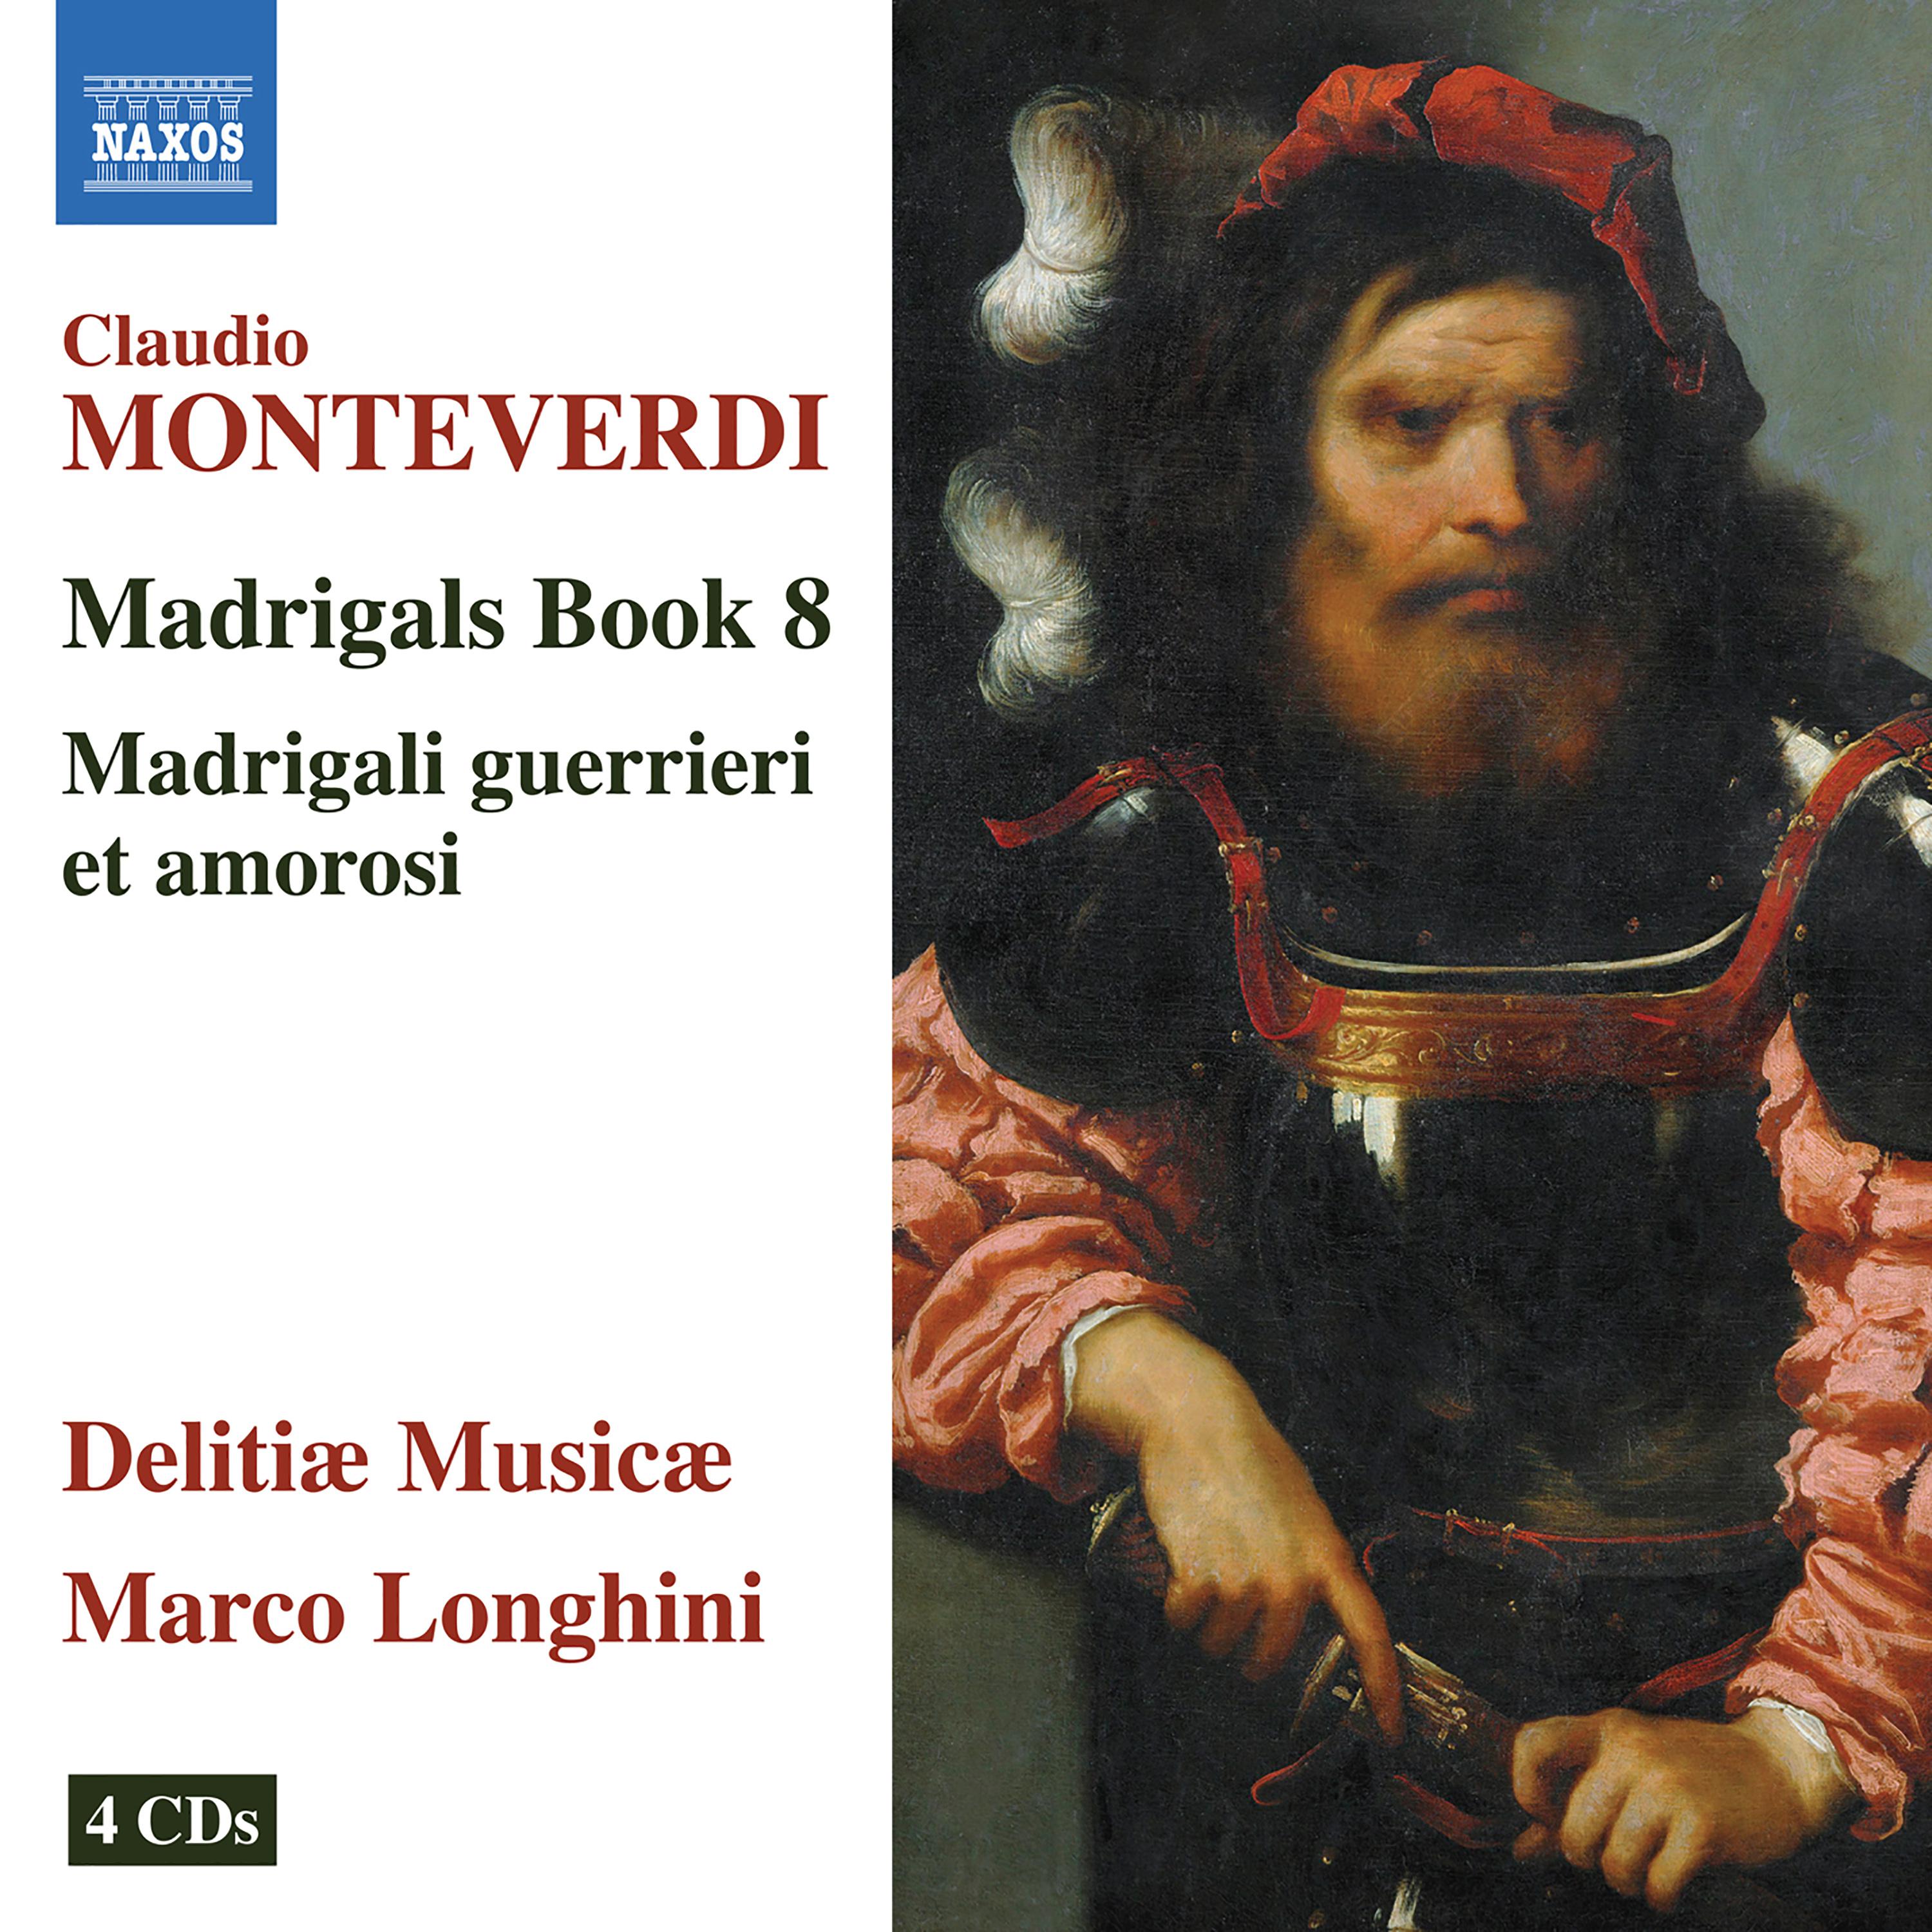 Delitiæ Musicæ - Mascherata dell'Ingrate, SV 167, 